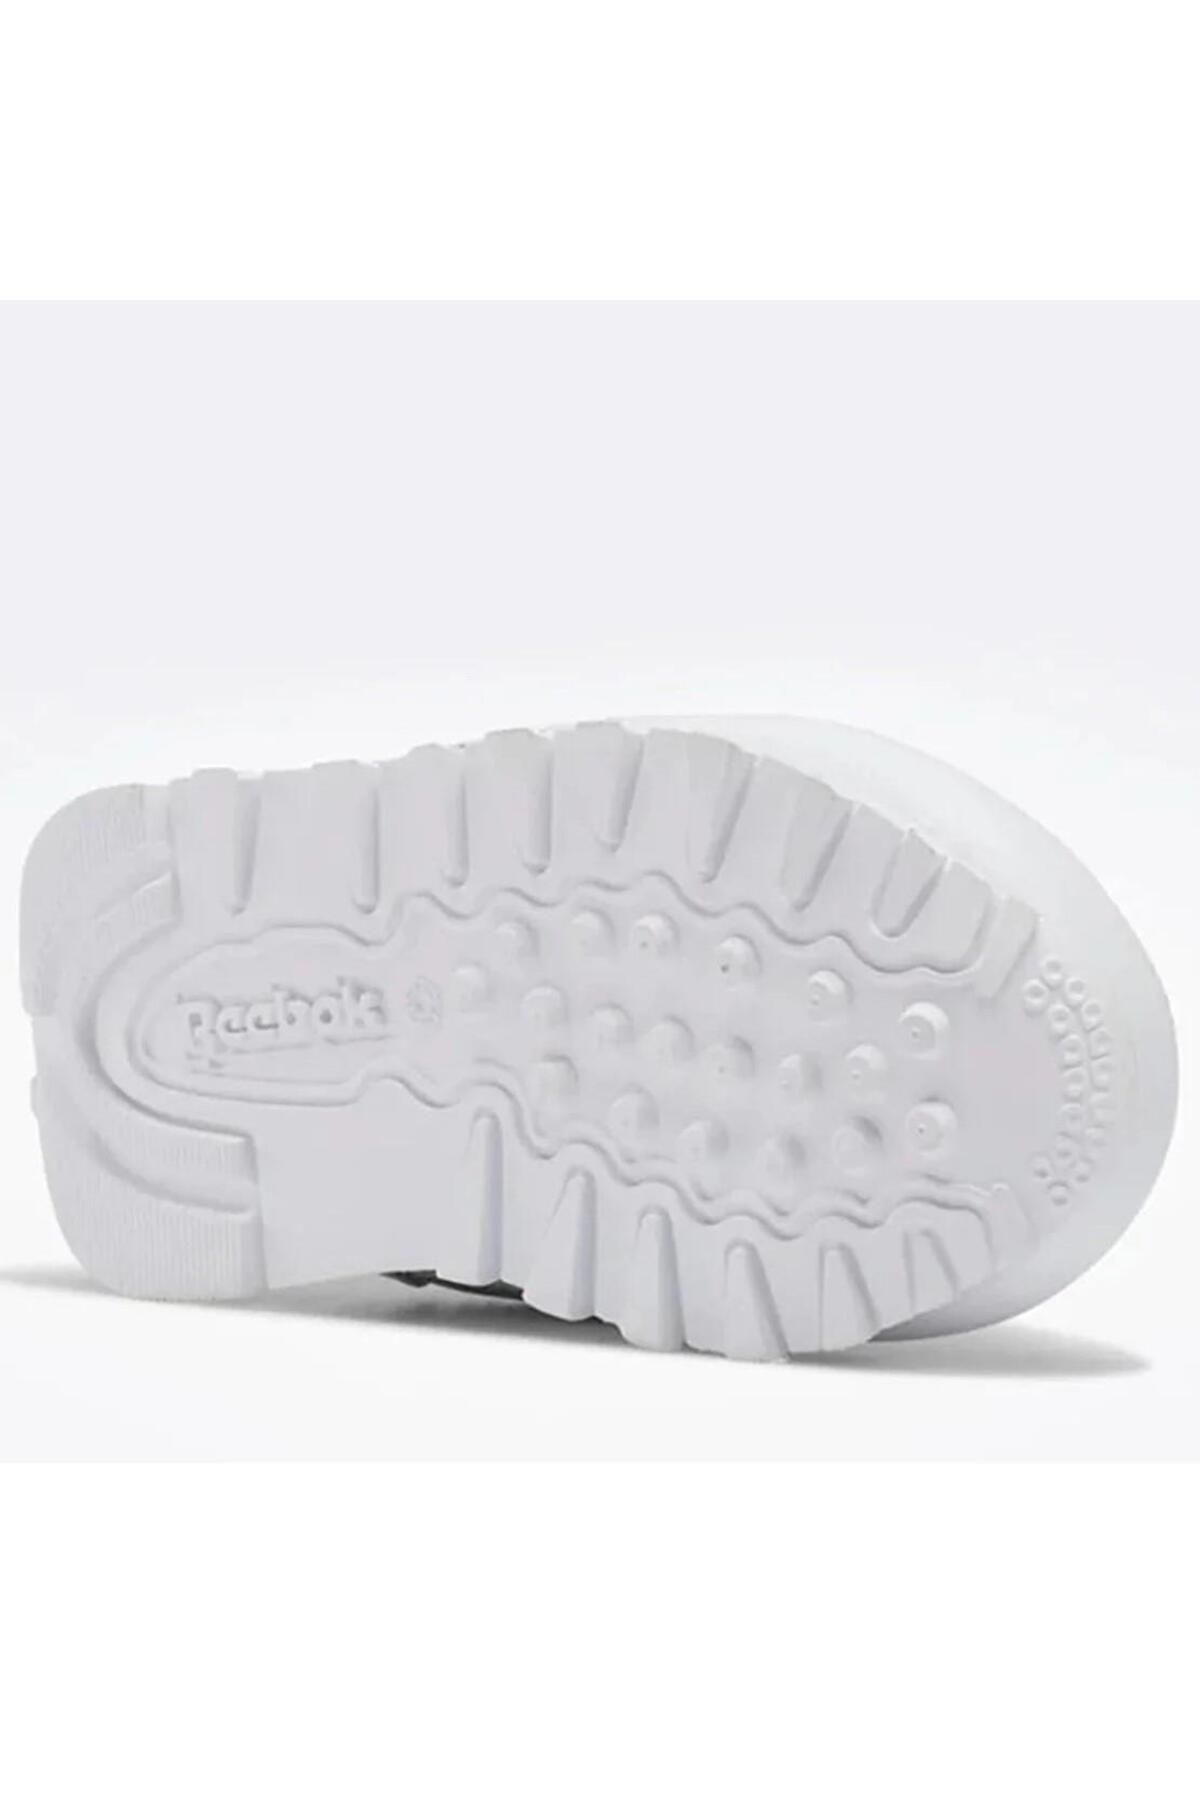 Reebok Classic Leather Beyaz Ub Sneaker